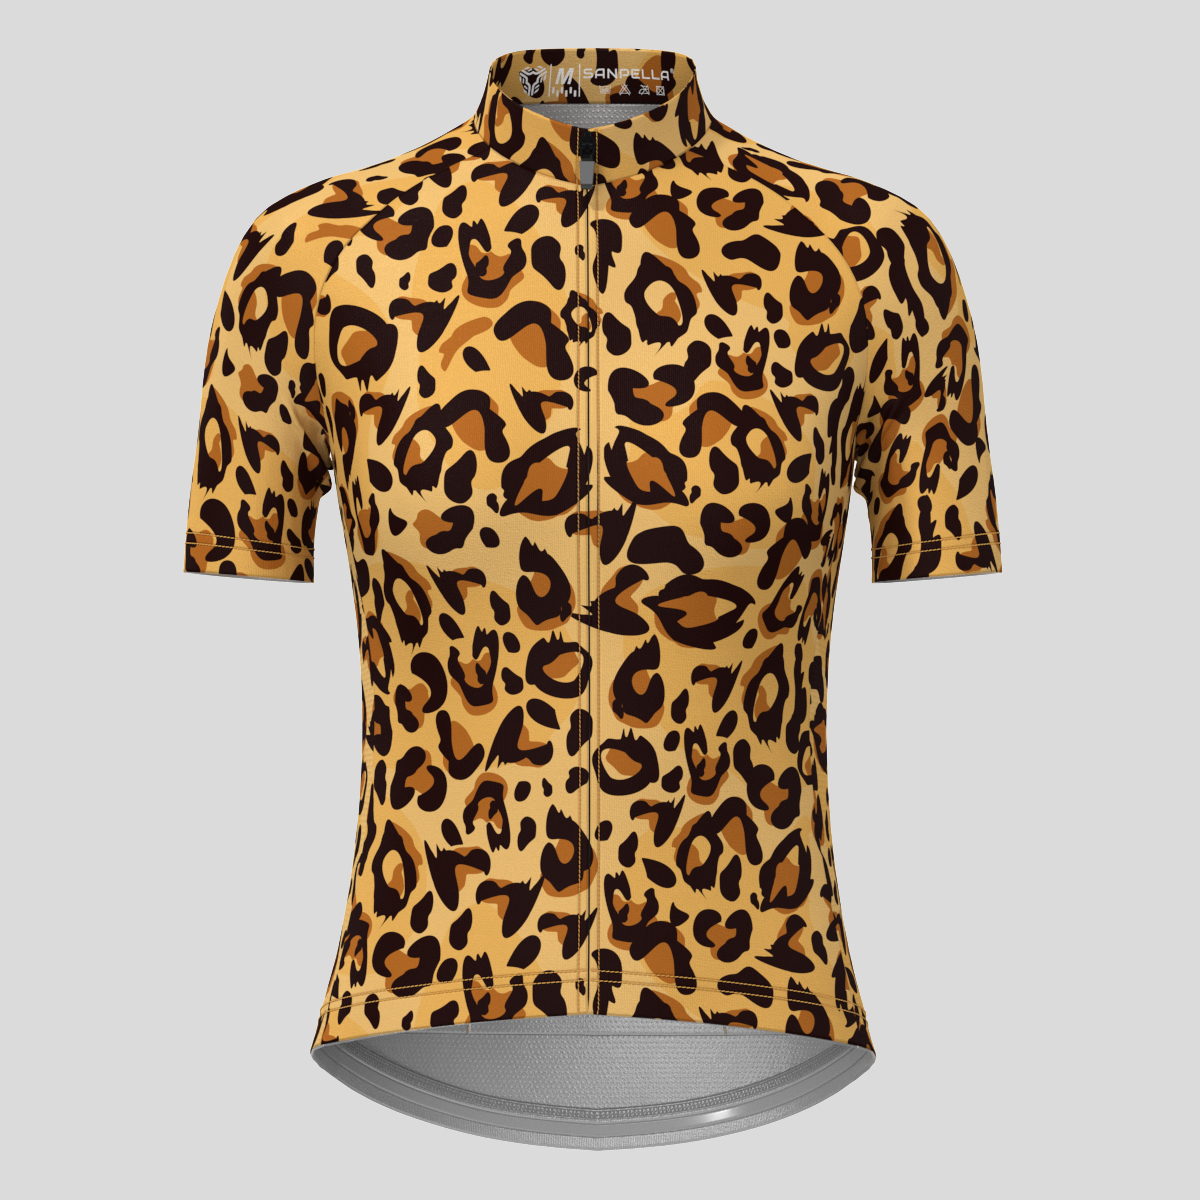 Leopard Print Women's Cycling Jersey -  Brown